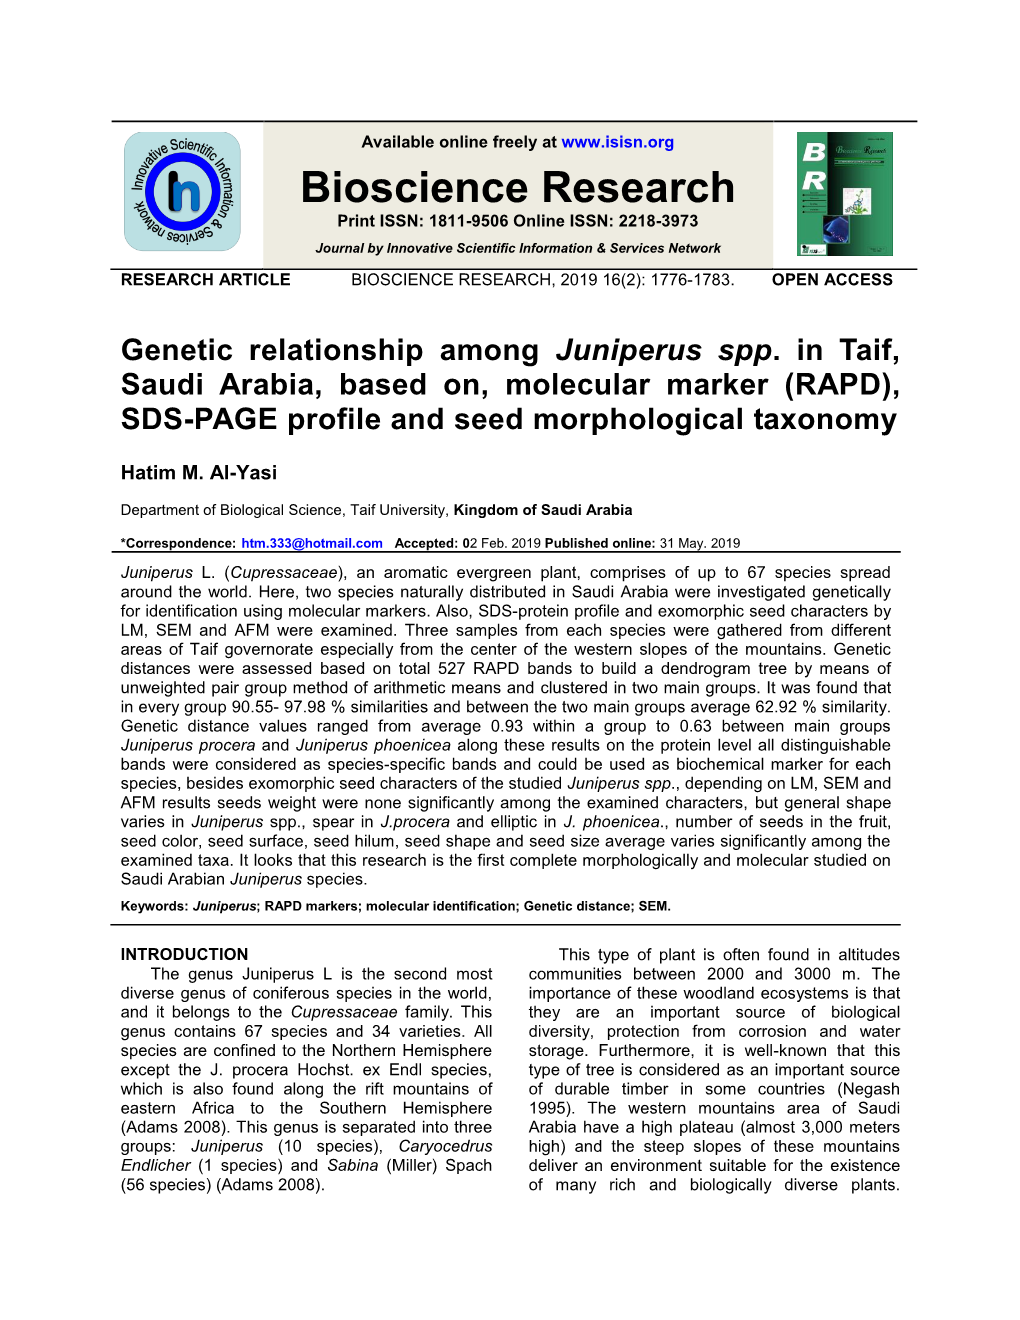 Hatim Matuq Al-Yasi Genetic Relationship Among Juniperus Spp